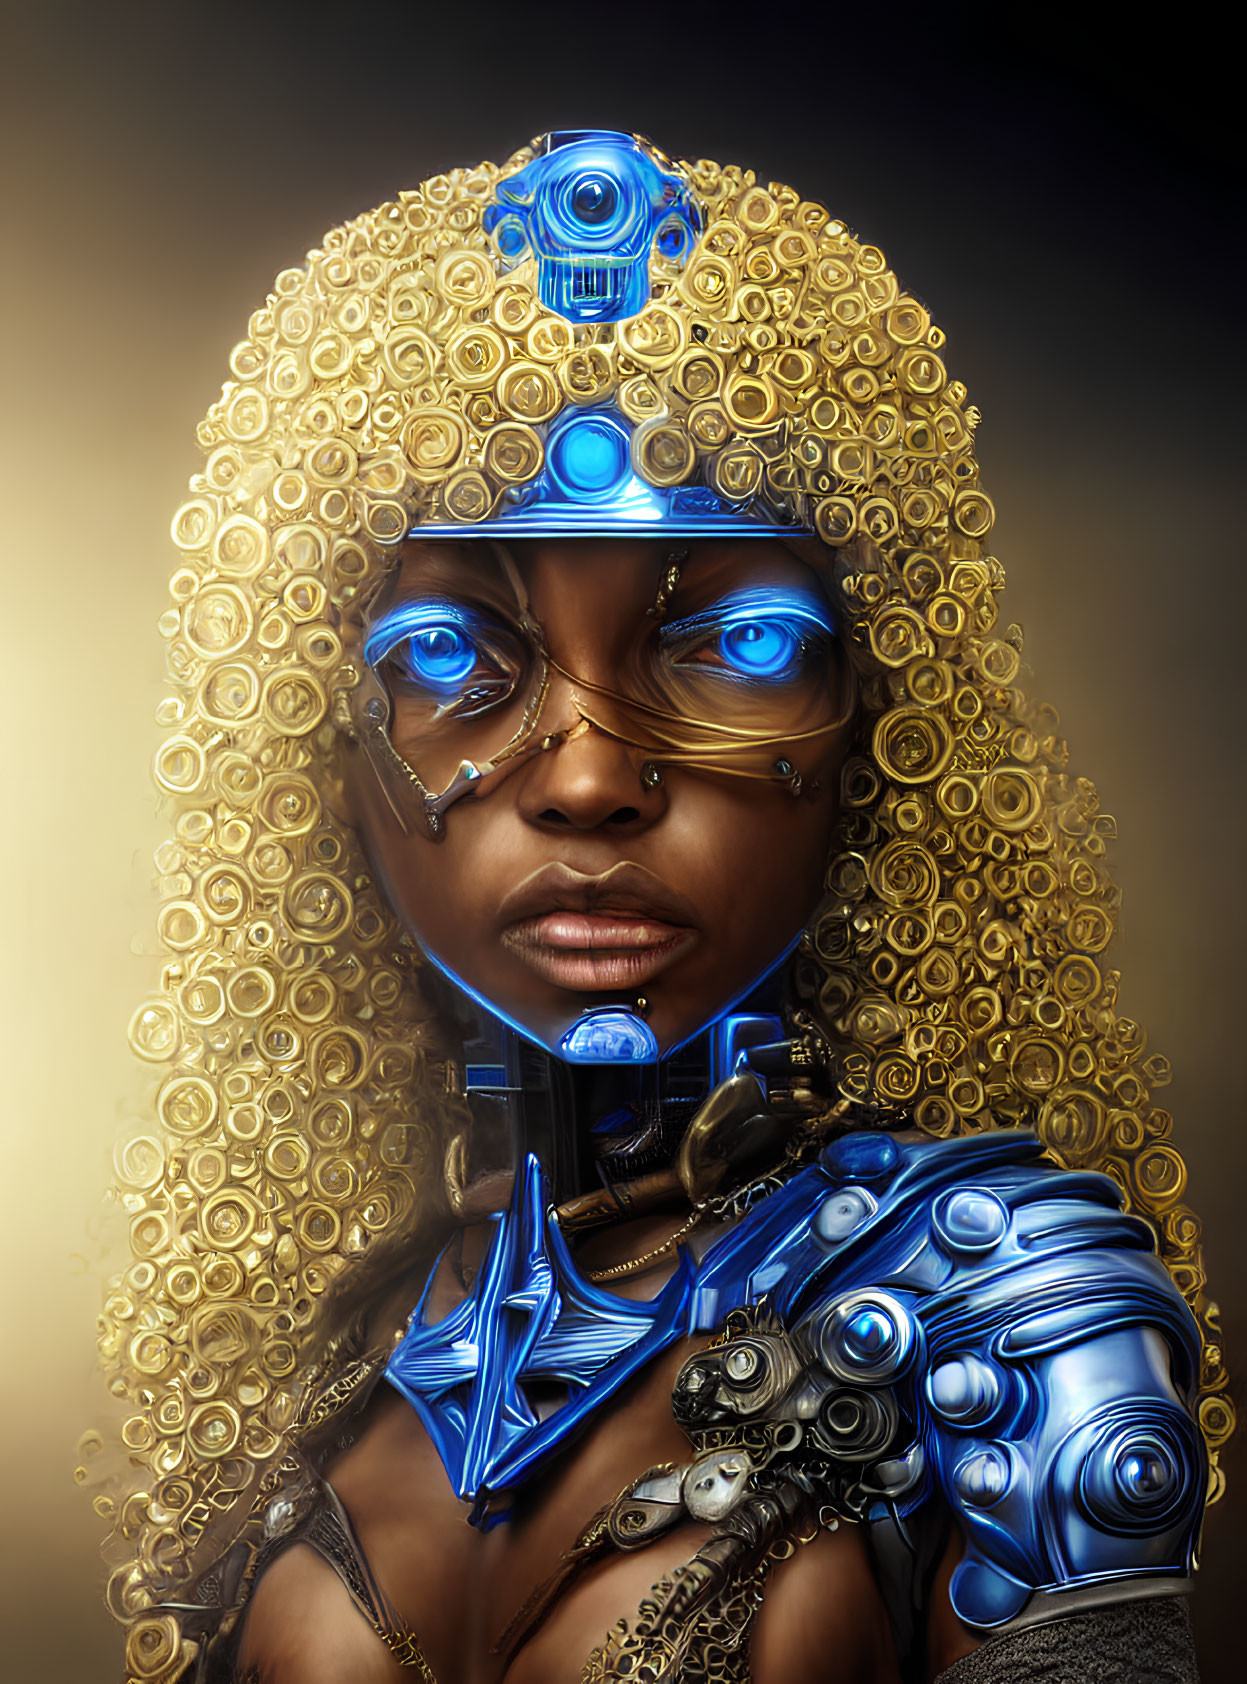 Woman with Cybernetic Enhancements: Blue Glowing Eyes, Mechanical Limbs, Gold Headgear